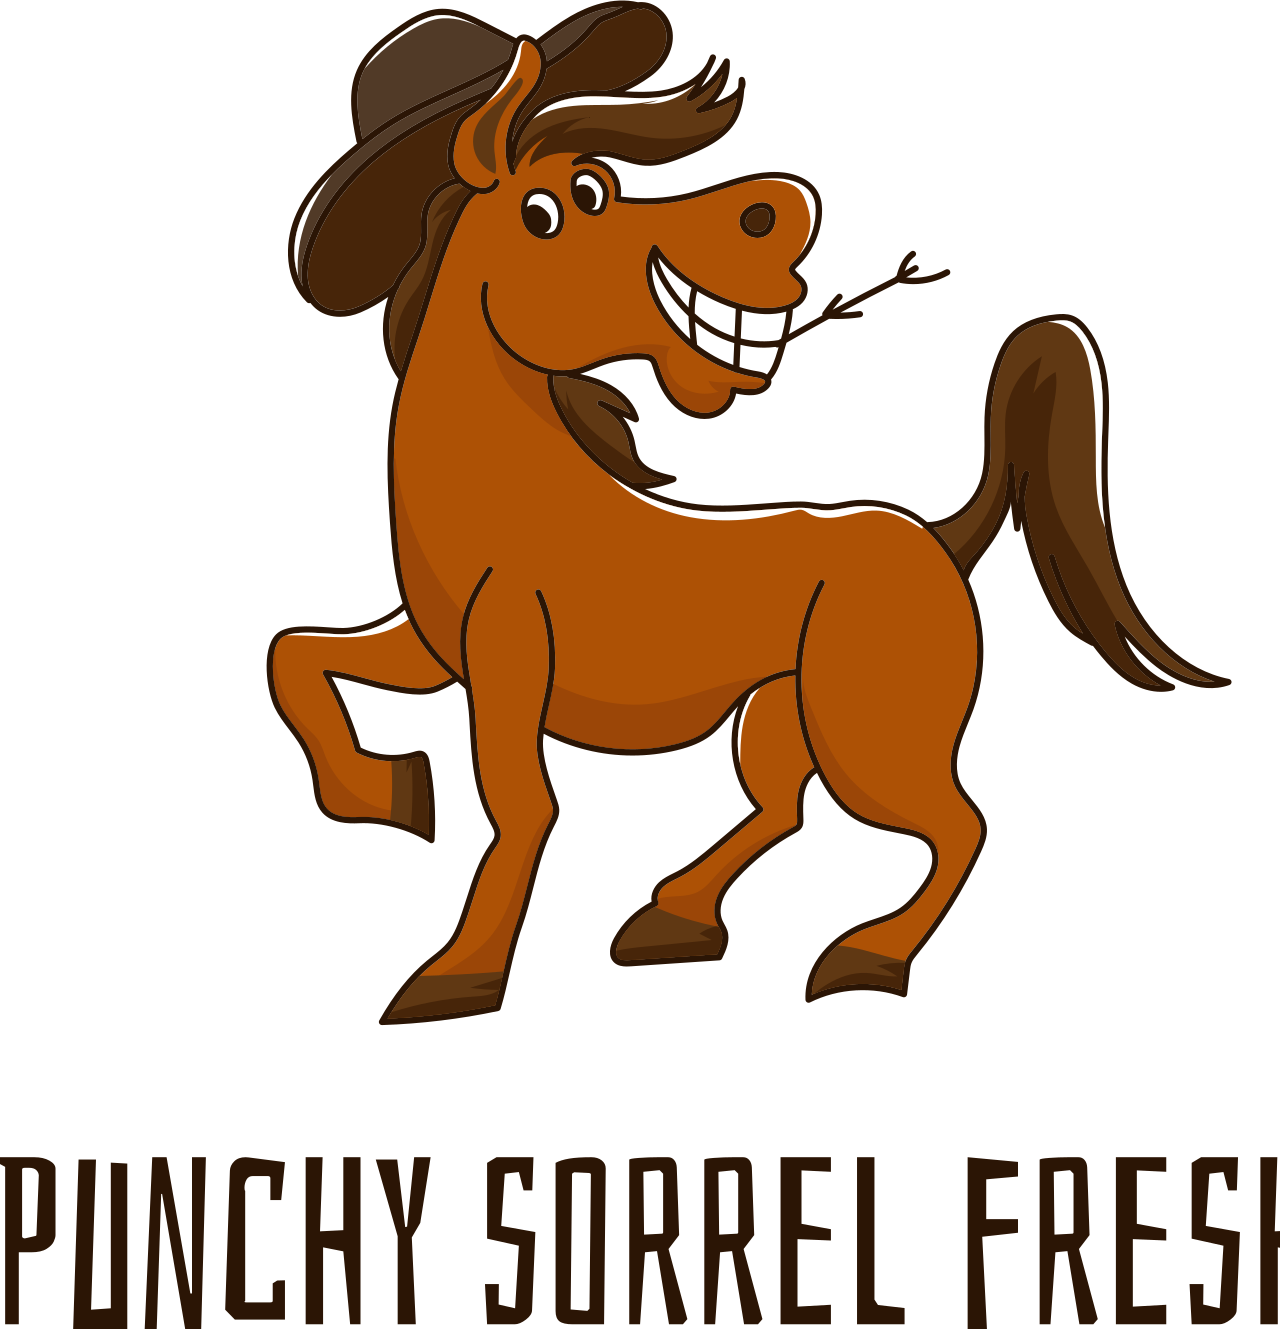 Punchy sorrel freshies's logo